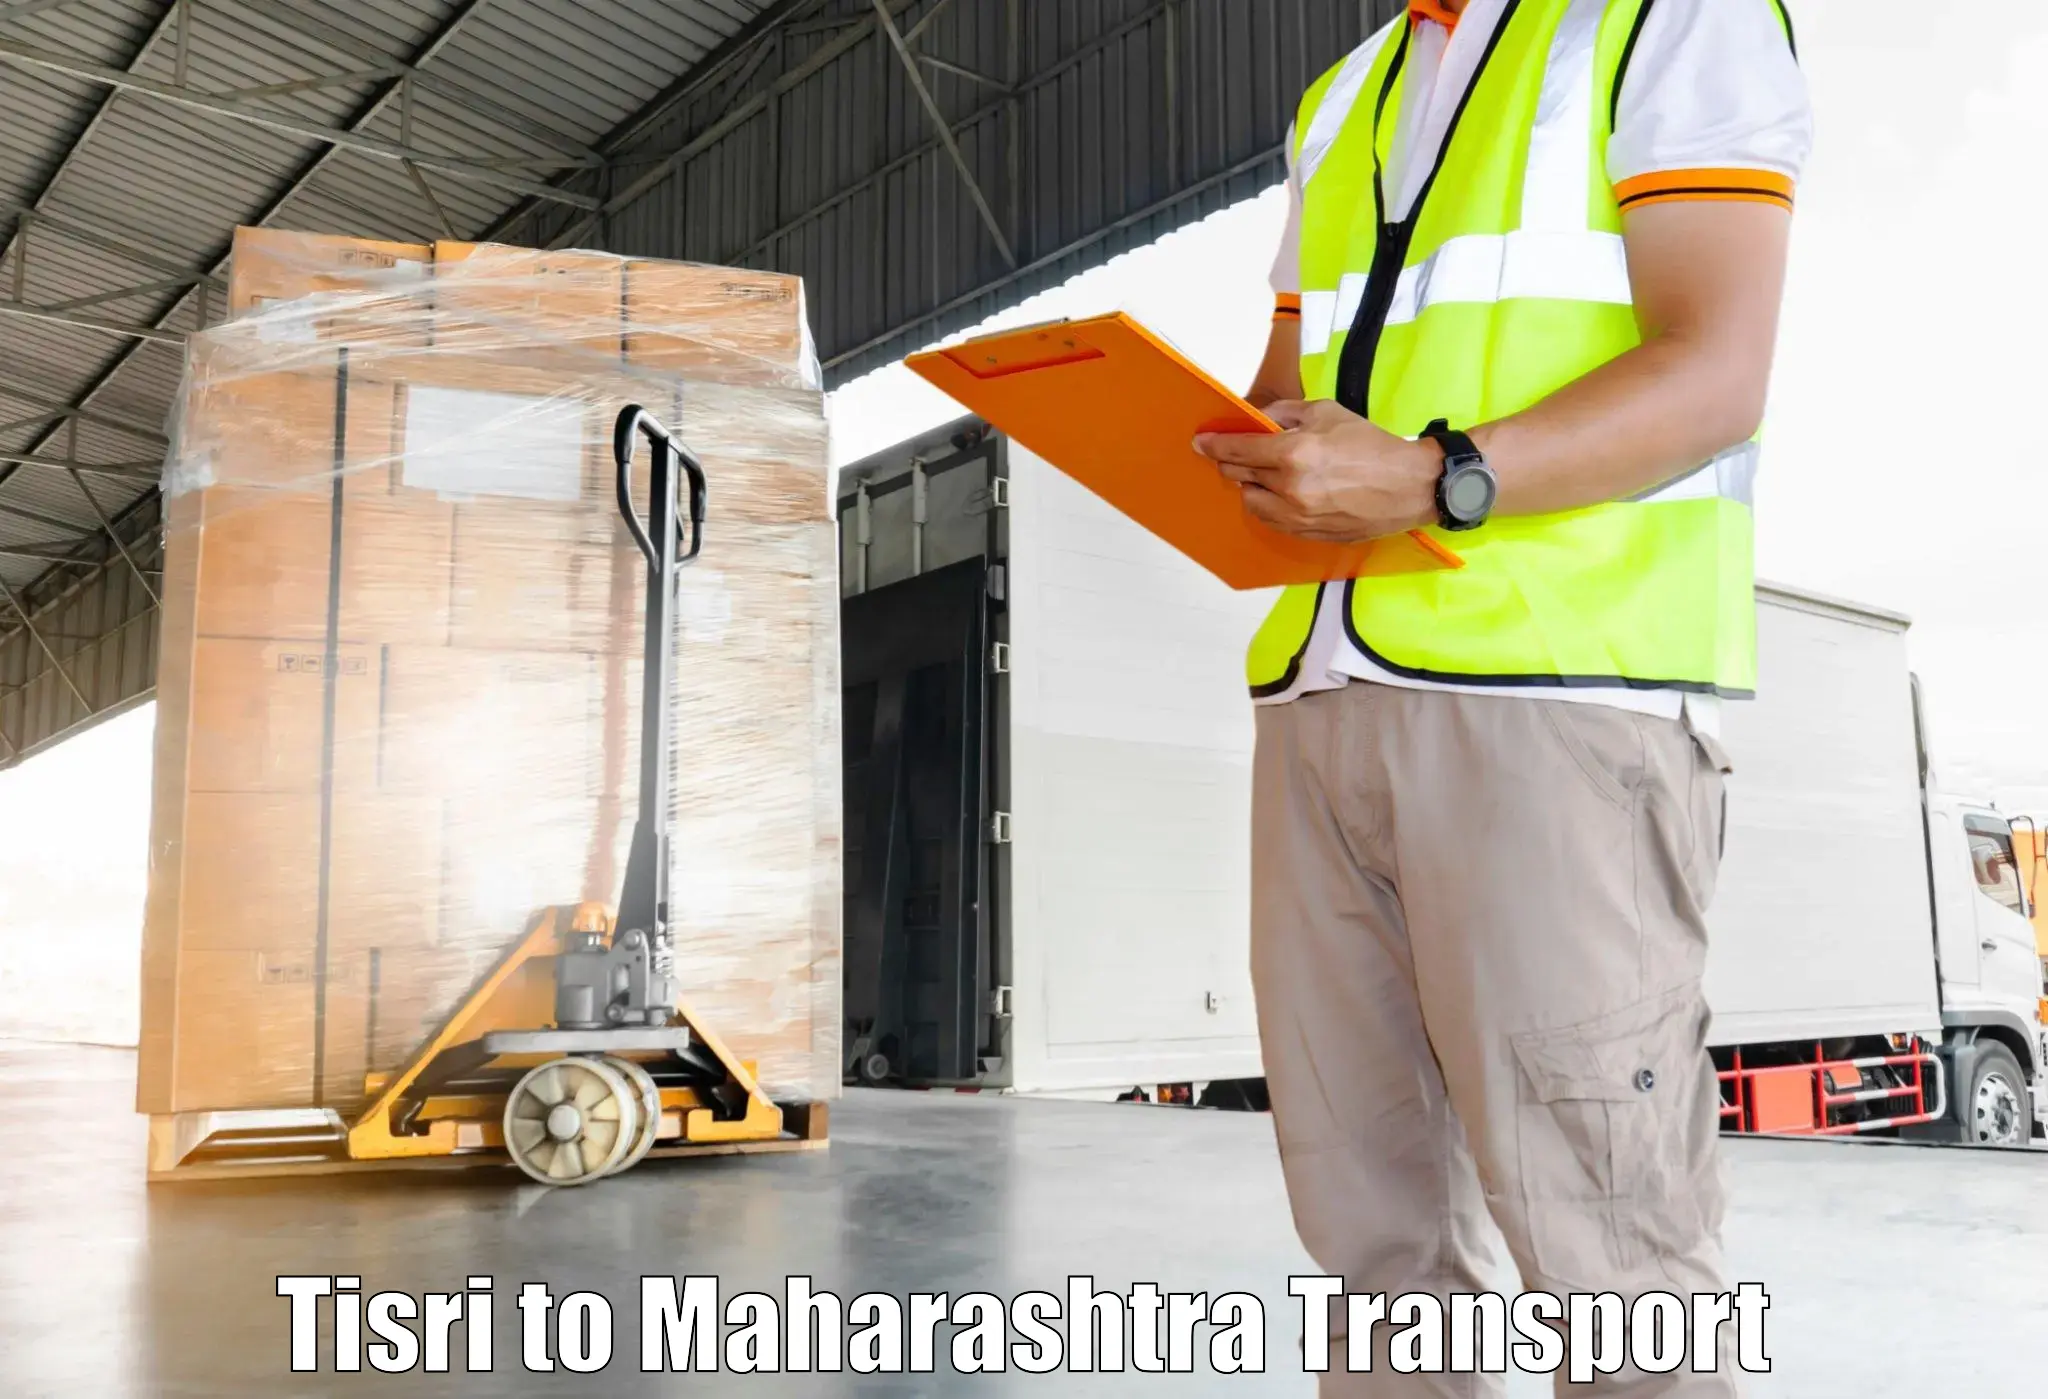 Interstate transport services Tisri to Pune